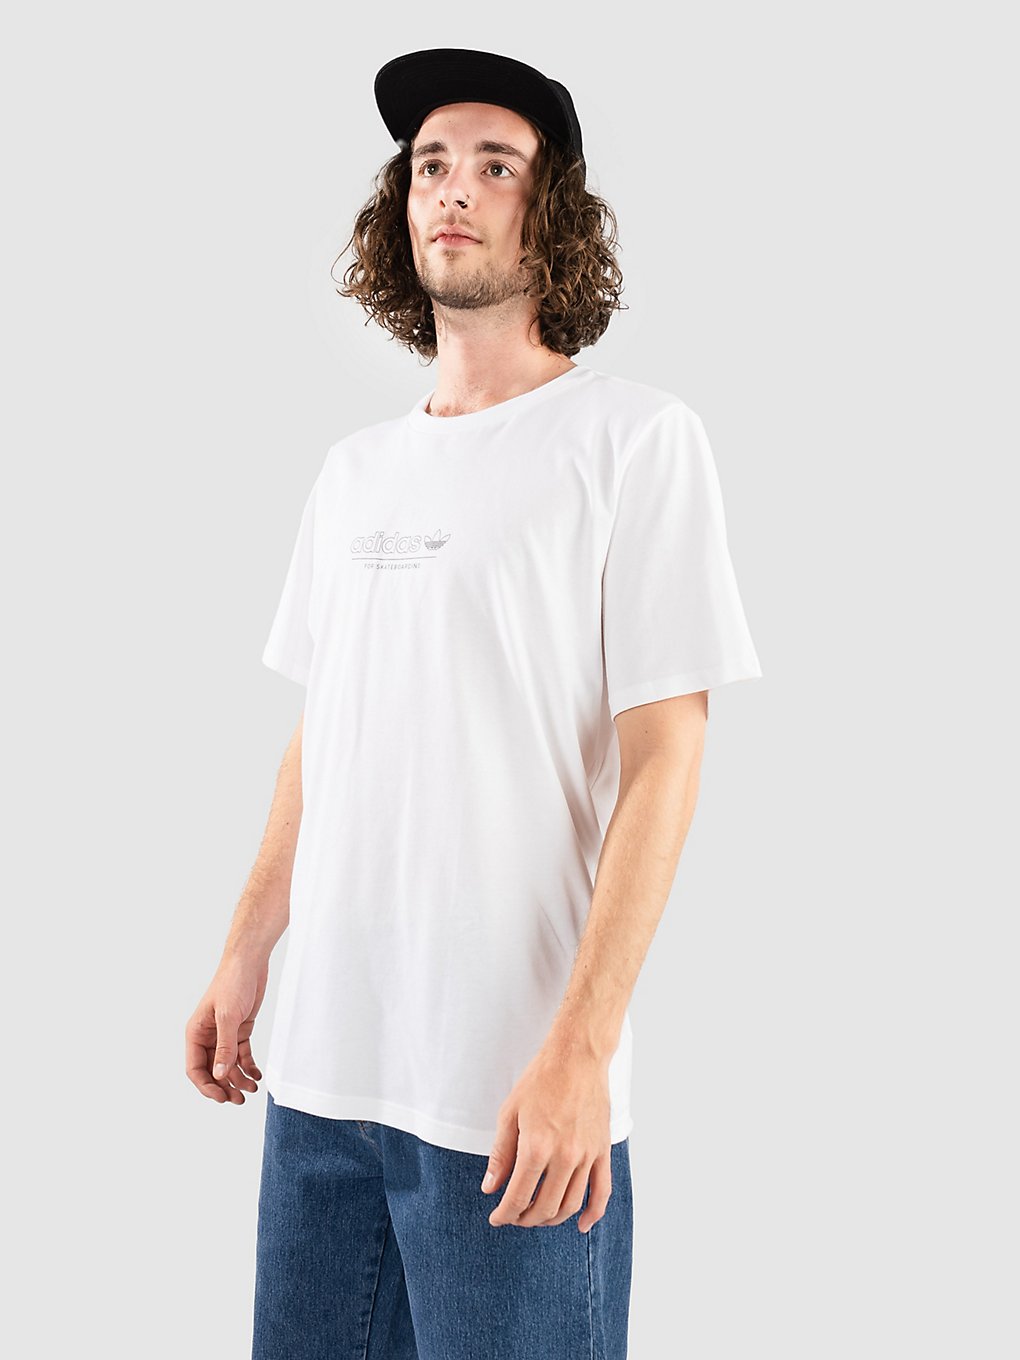 adidas Skateboarding 4.0 Strike T-Shirt wit